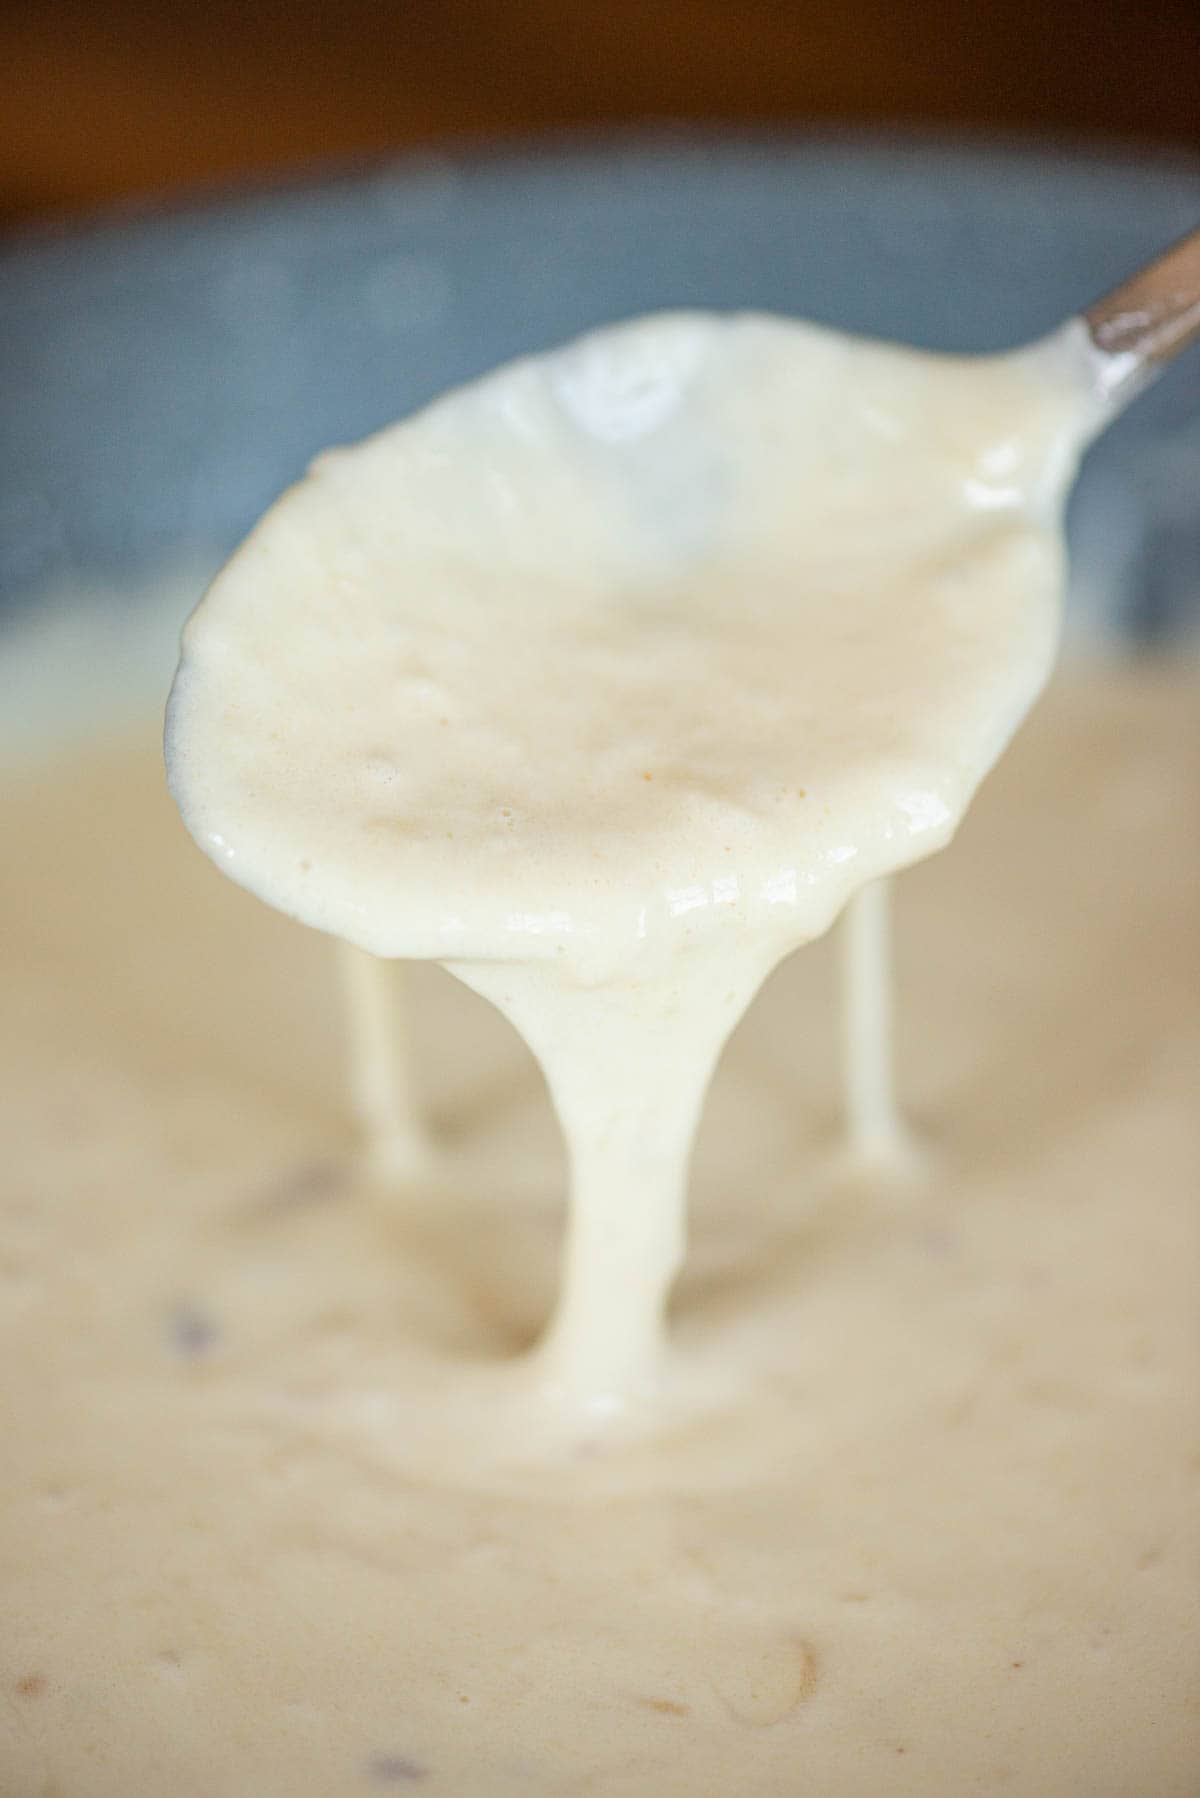 spoonful of homemade garlic infused creamy Alfredo sauce.